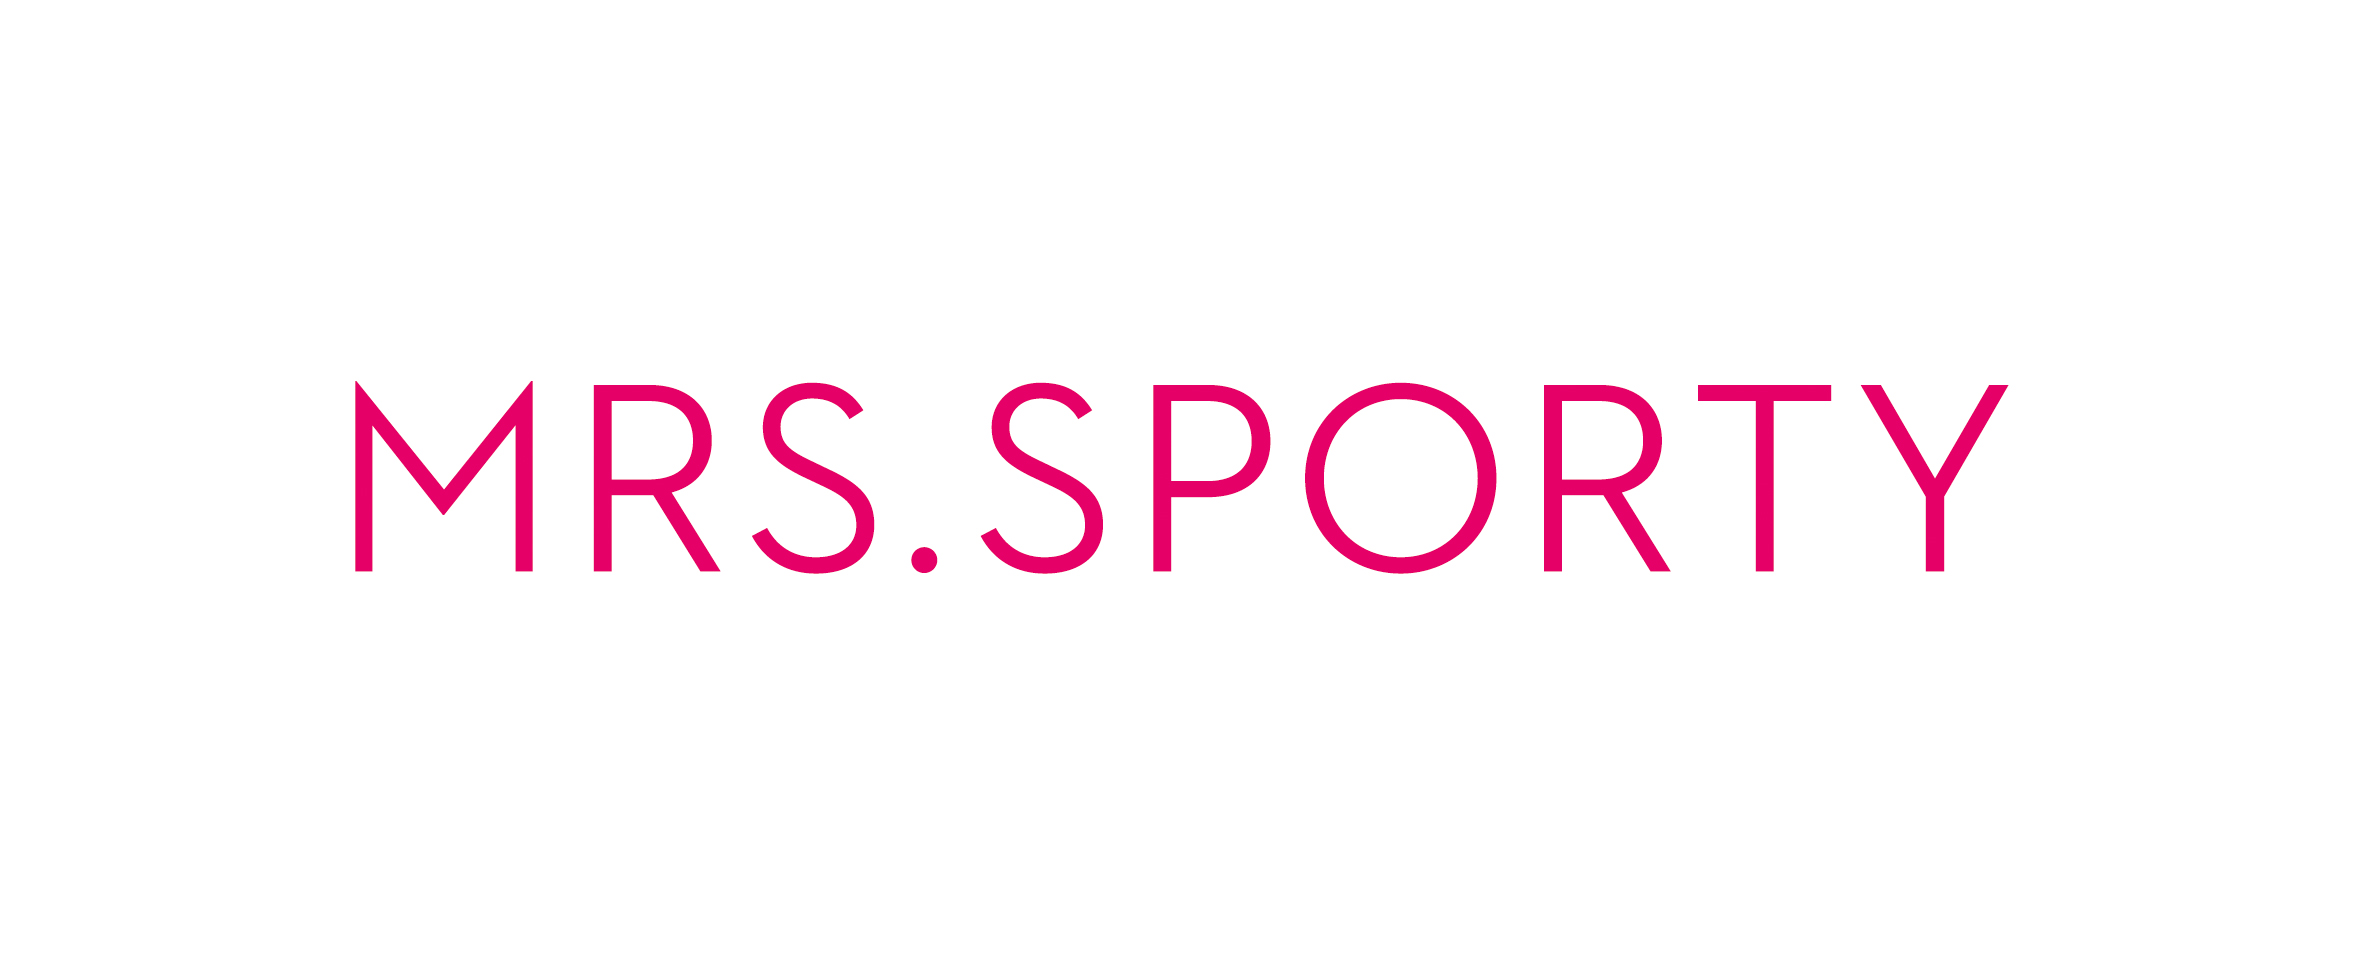  Mrs.Sporty München-Pasing Logo